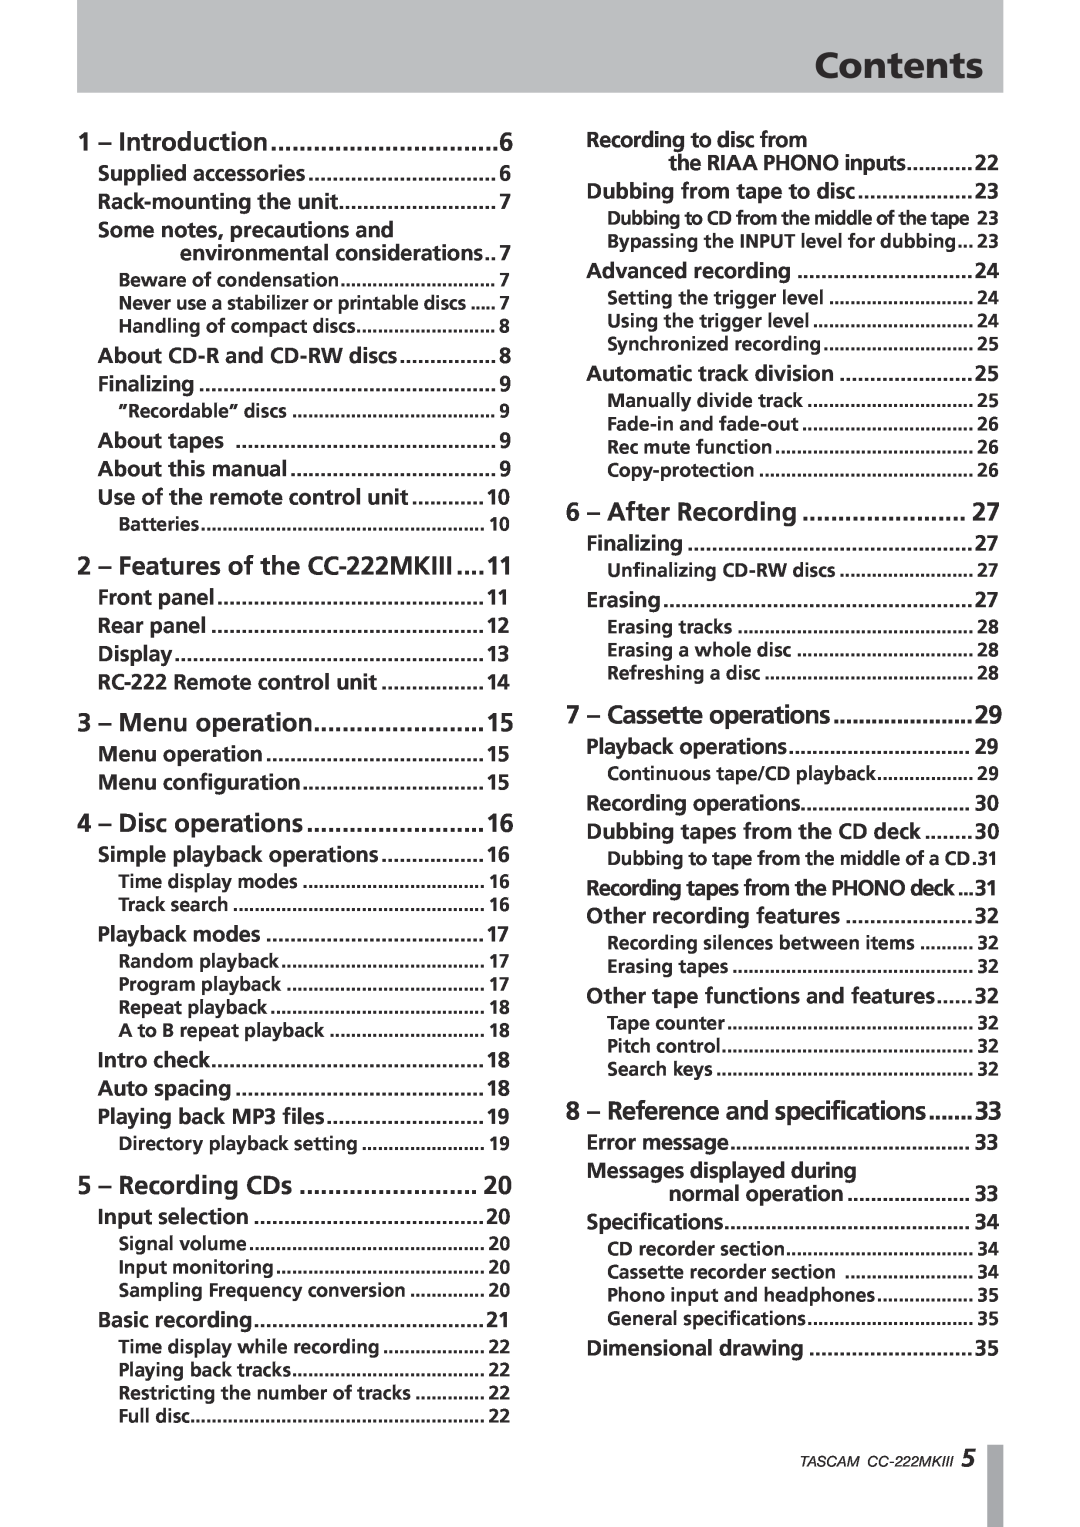 Tascam CC-222MK owner manual Contents, Menu operation 